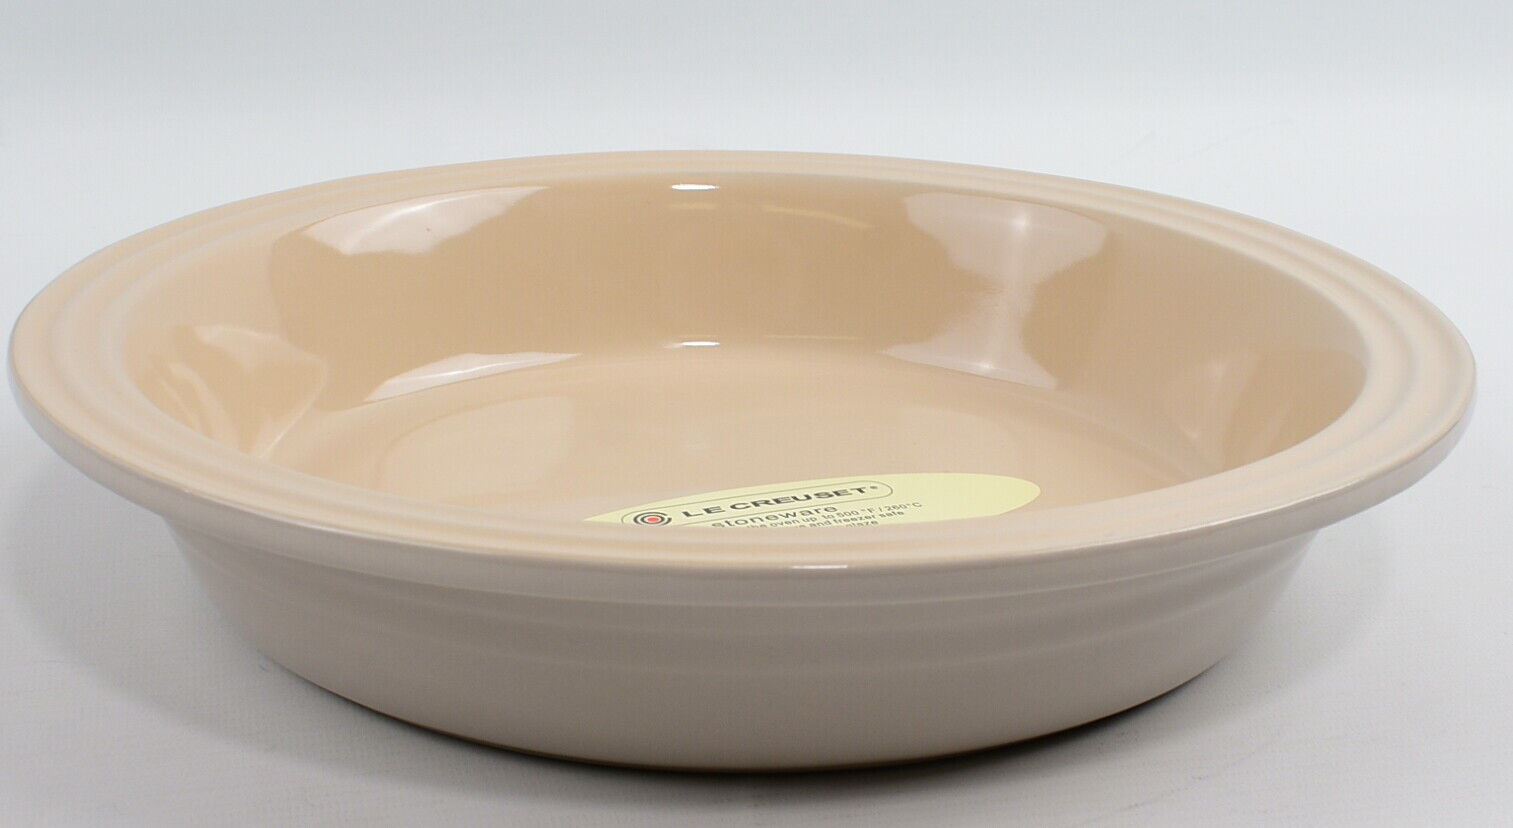 LE CREUSET Round Baking Dish 26cm in diameter x 5.5cm deep, Mushroom Grey